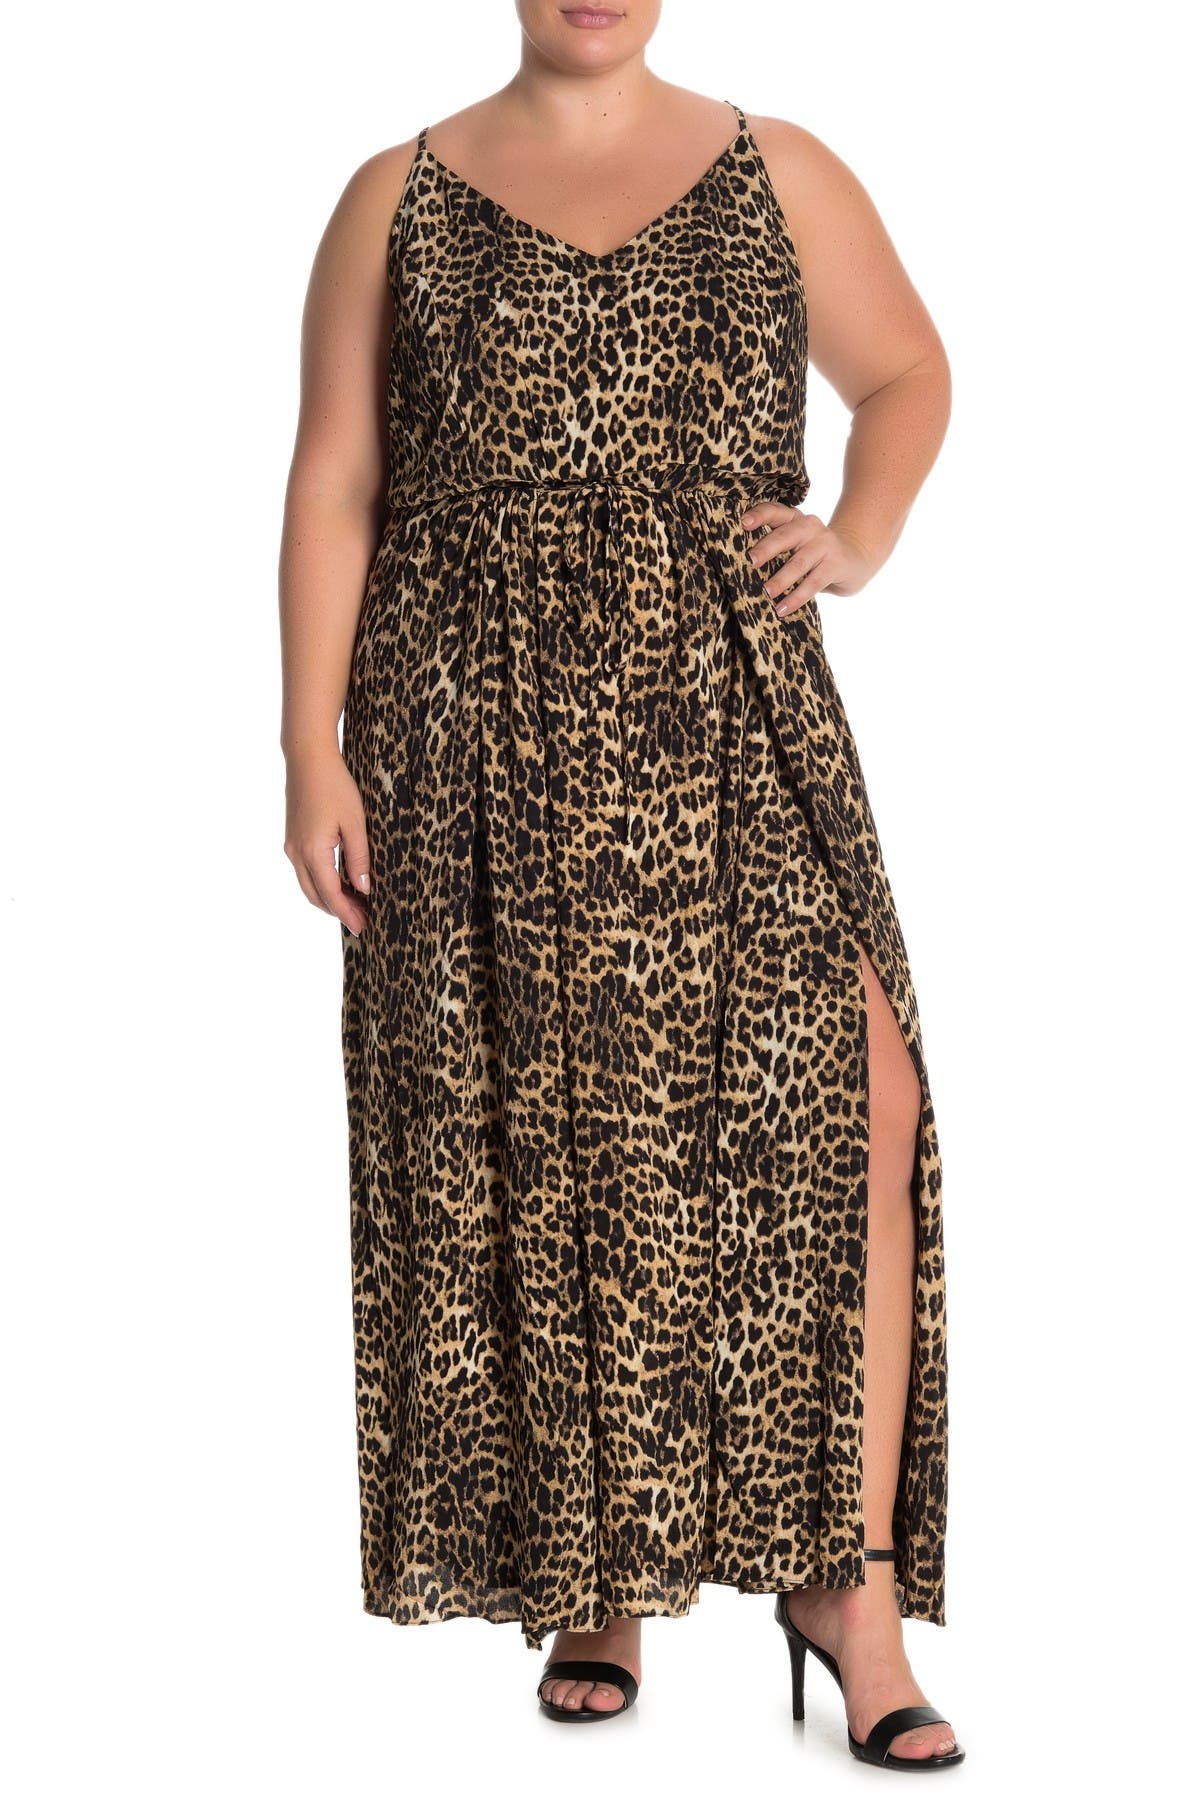 city chic leopard dress